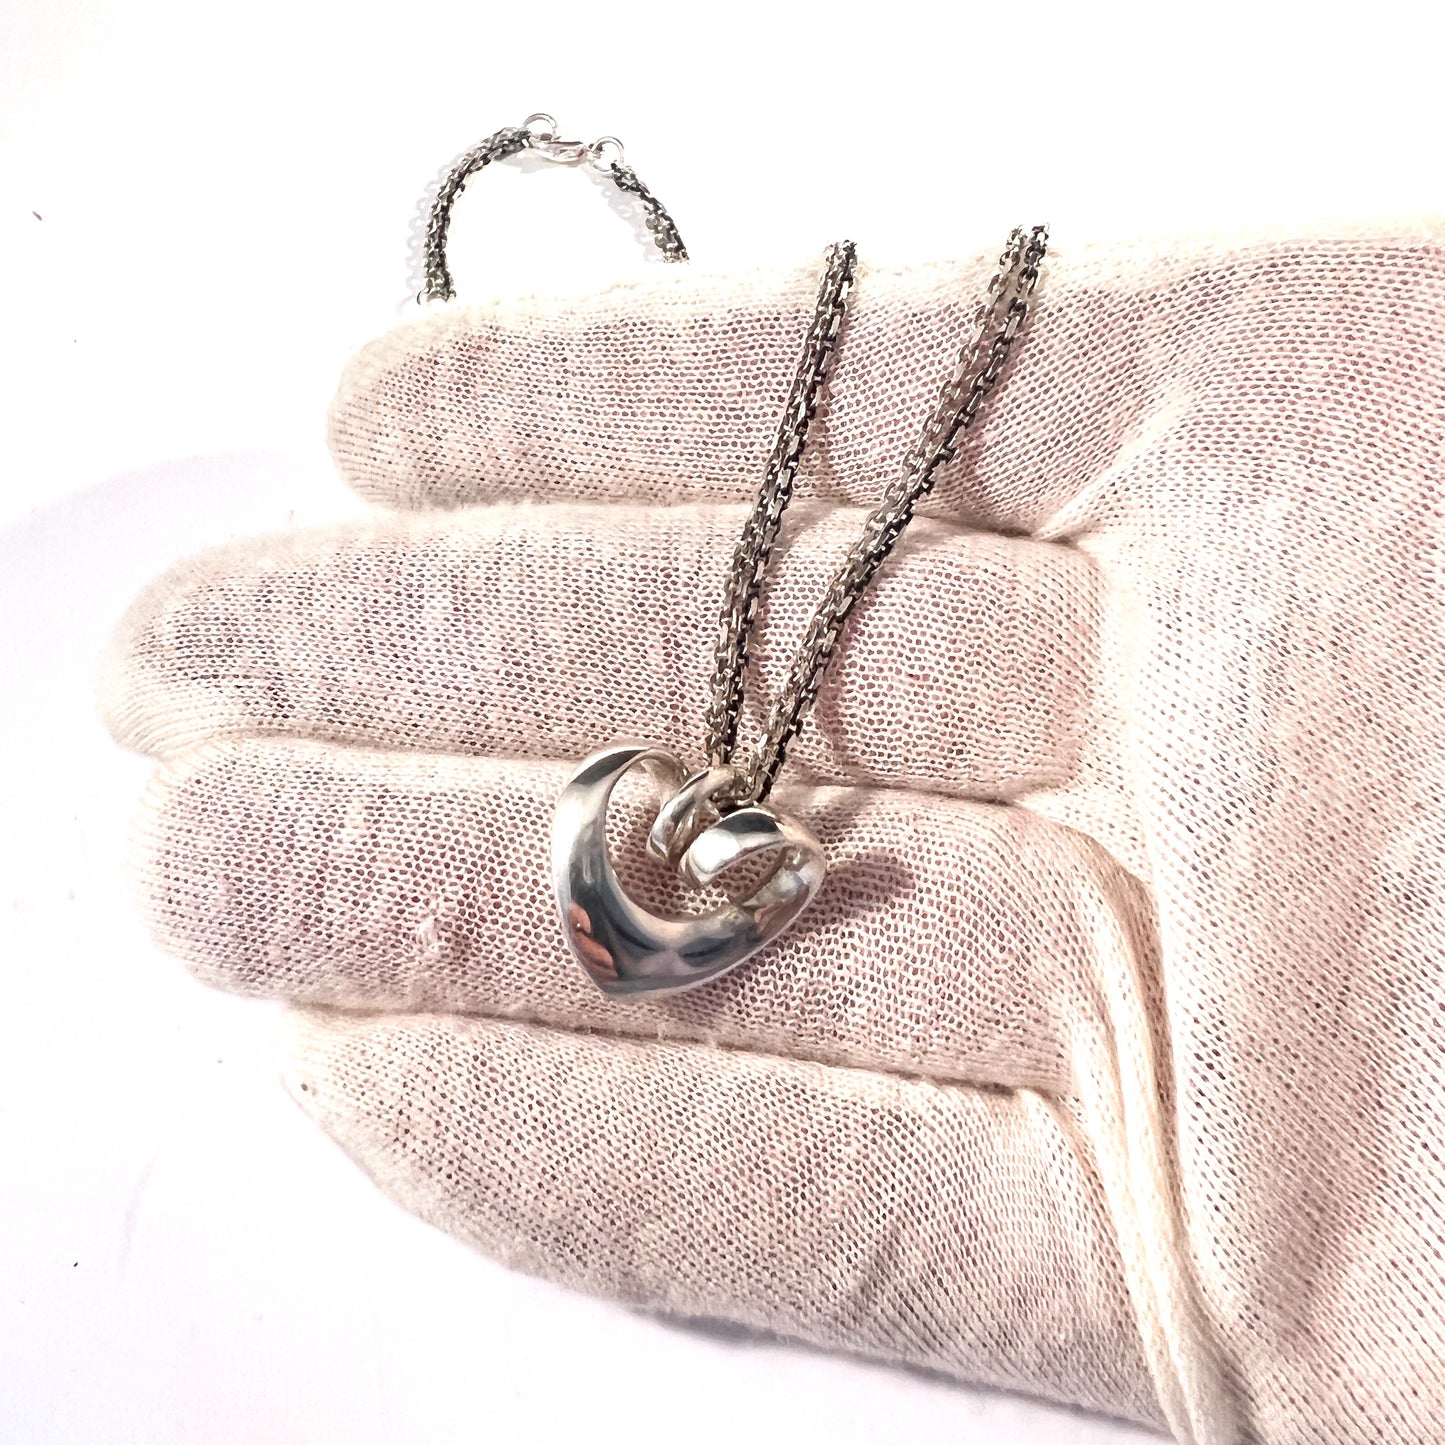 Georg Jensen, designer Regitze Overgaard 2001. Sterling Silver Double Heart Pendant Necklace.